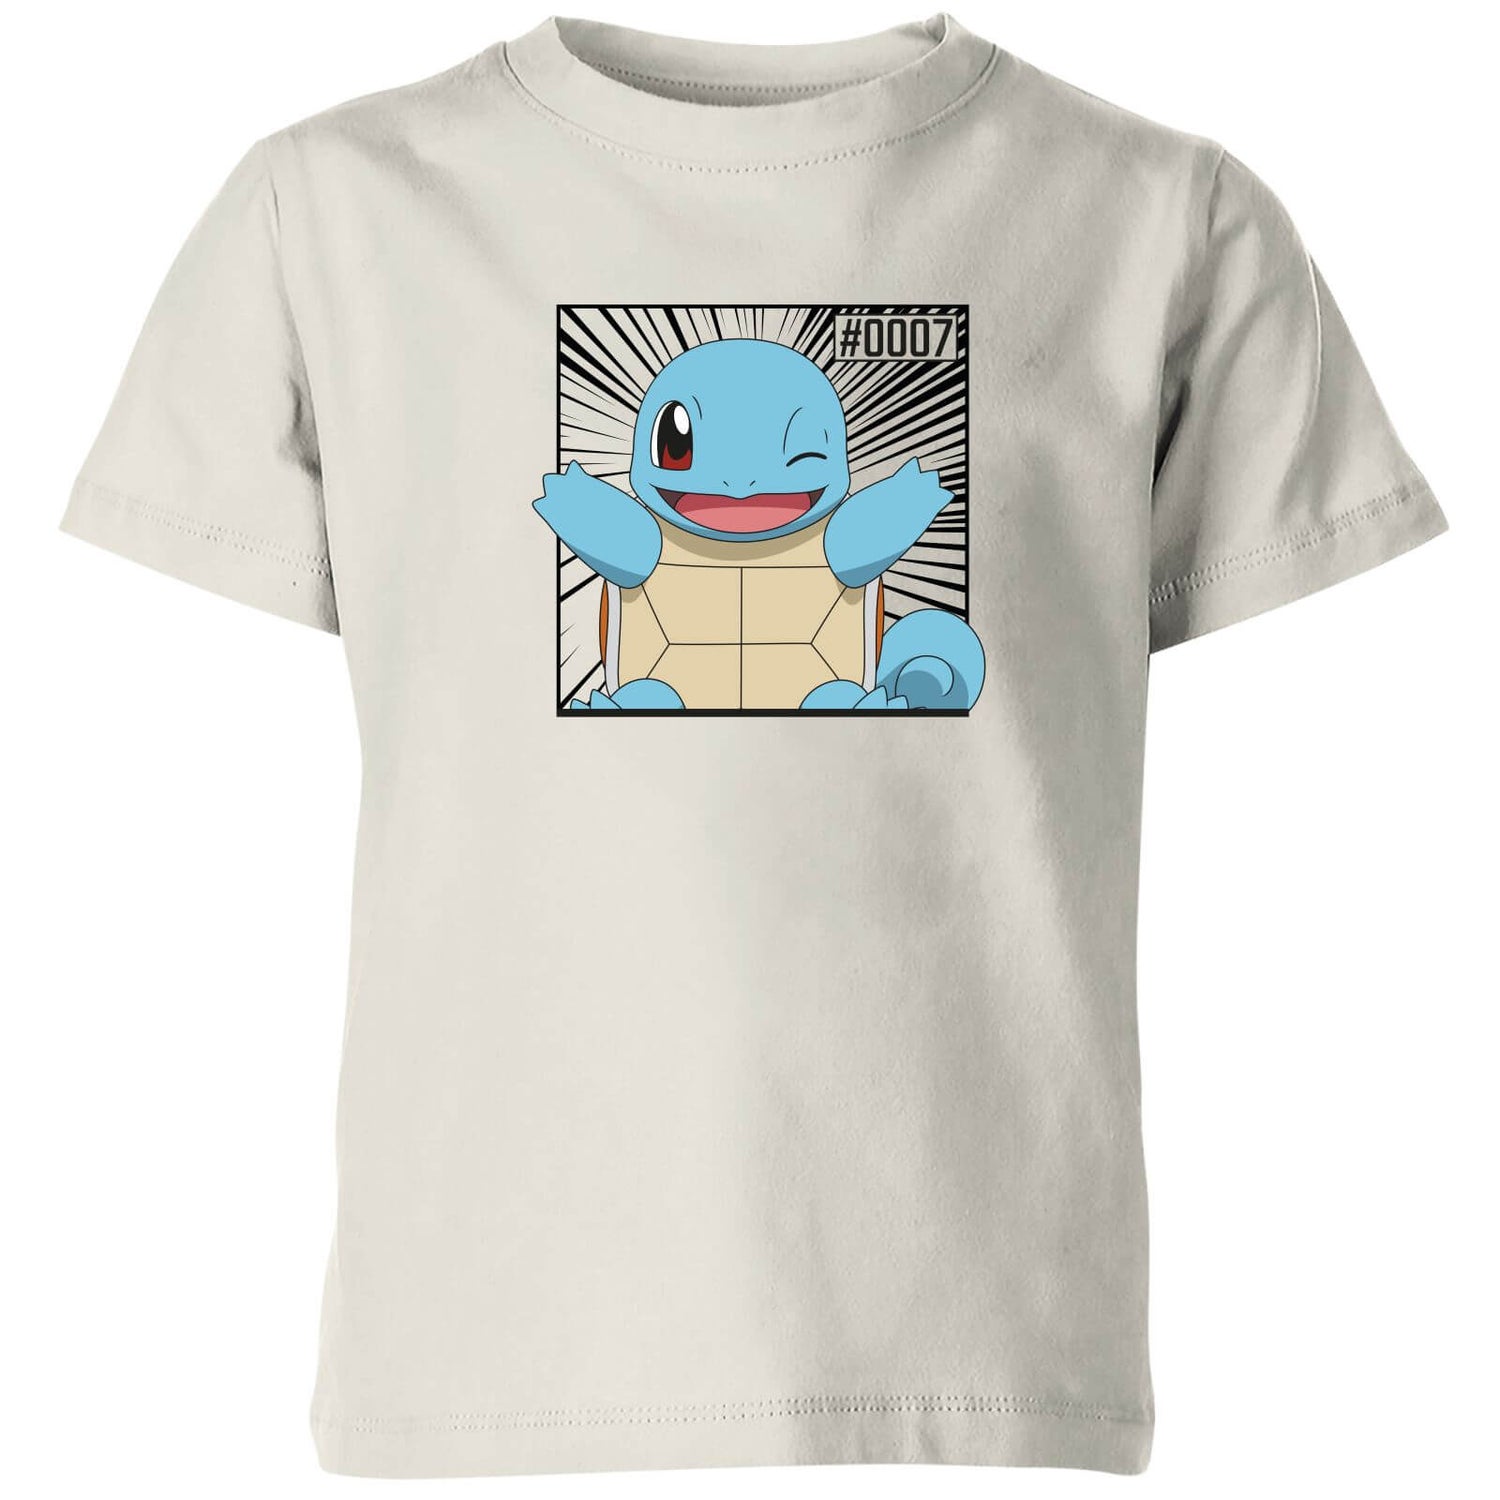 Pokémon Pokédex Squirtle #0007 Camiseta Niño - Crema